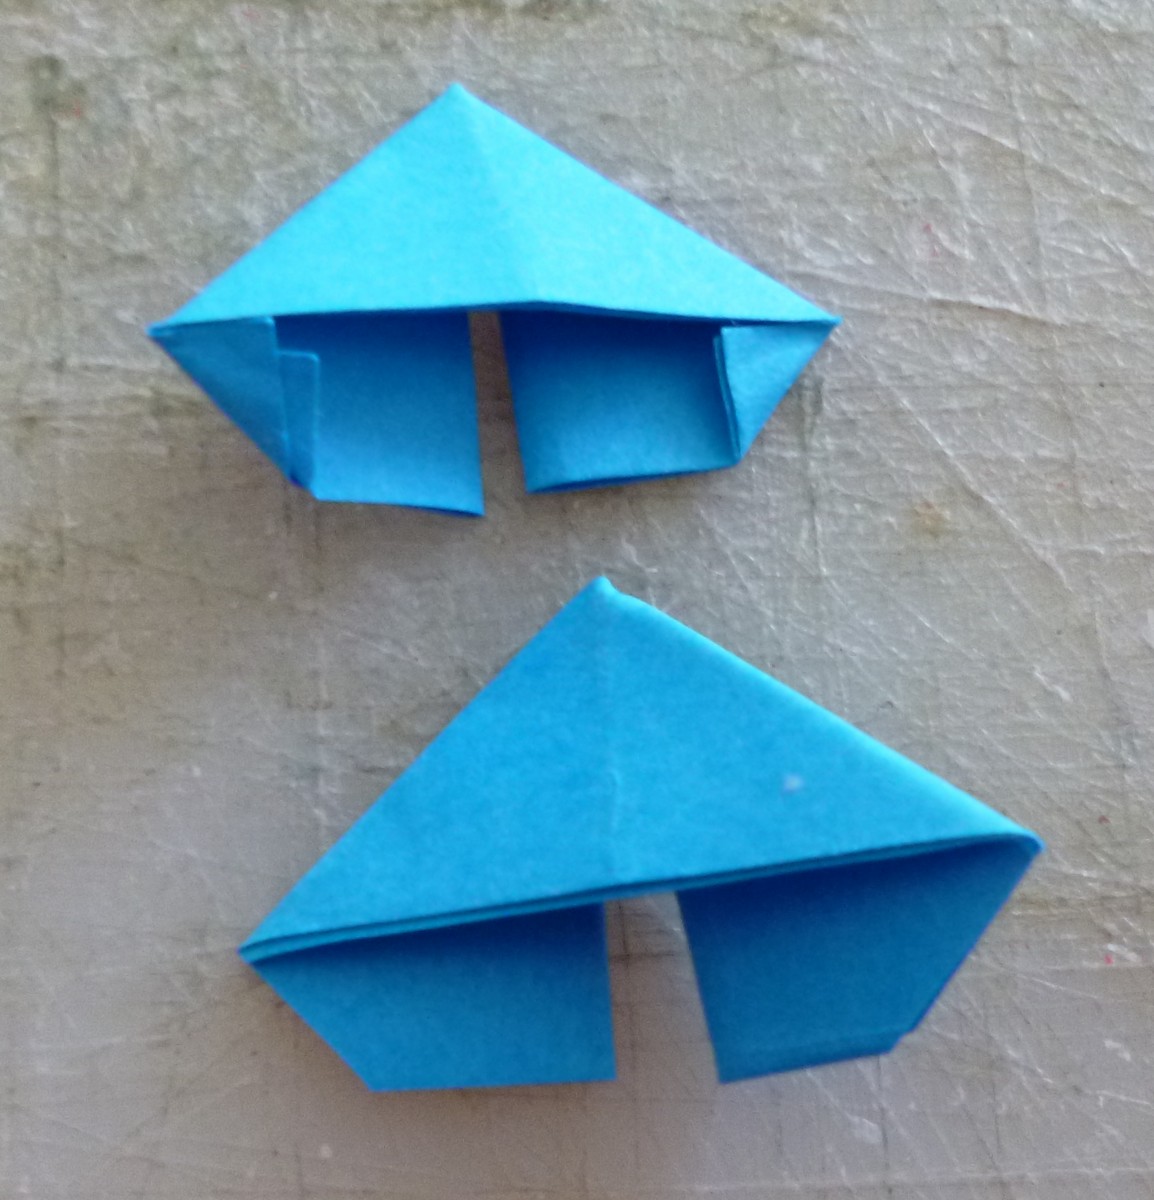 Origami 3D - Les Estivales des Taillades